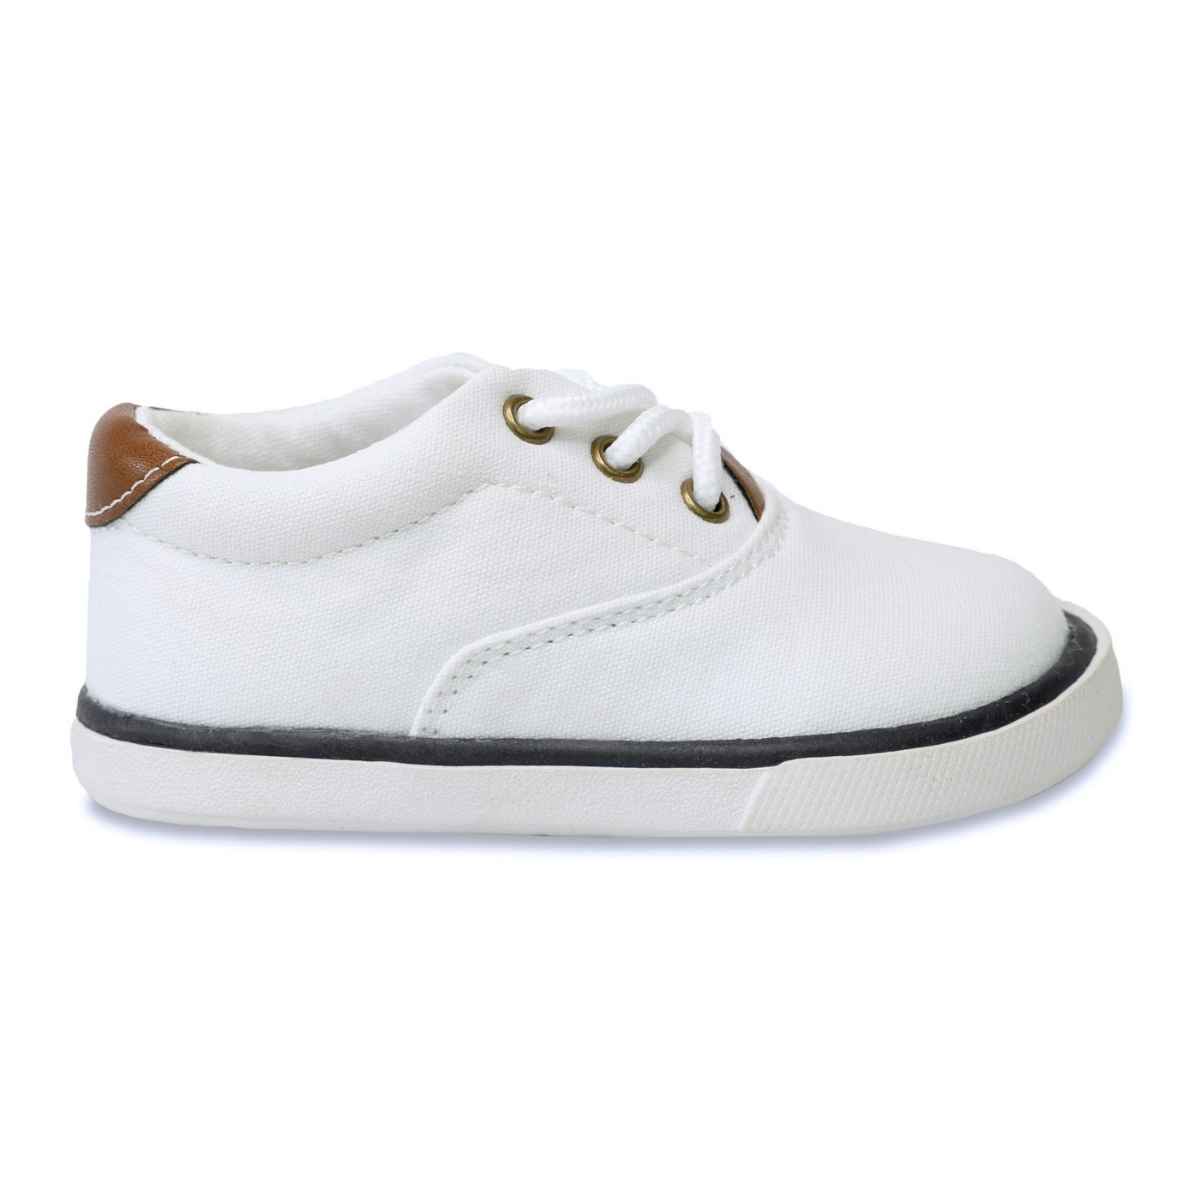 Milo White Canvas Toddler Sneakers - Kids Shoe Box